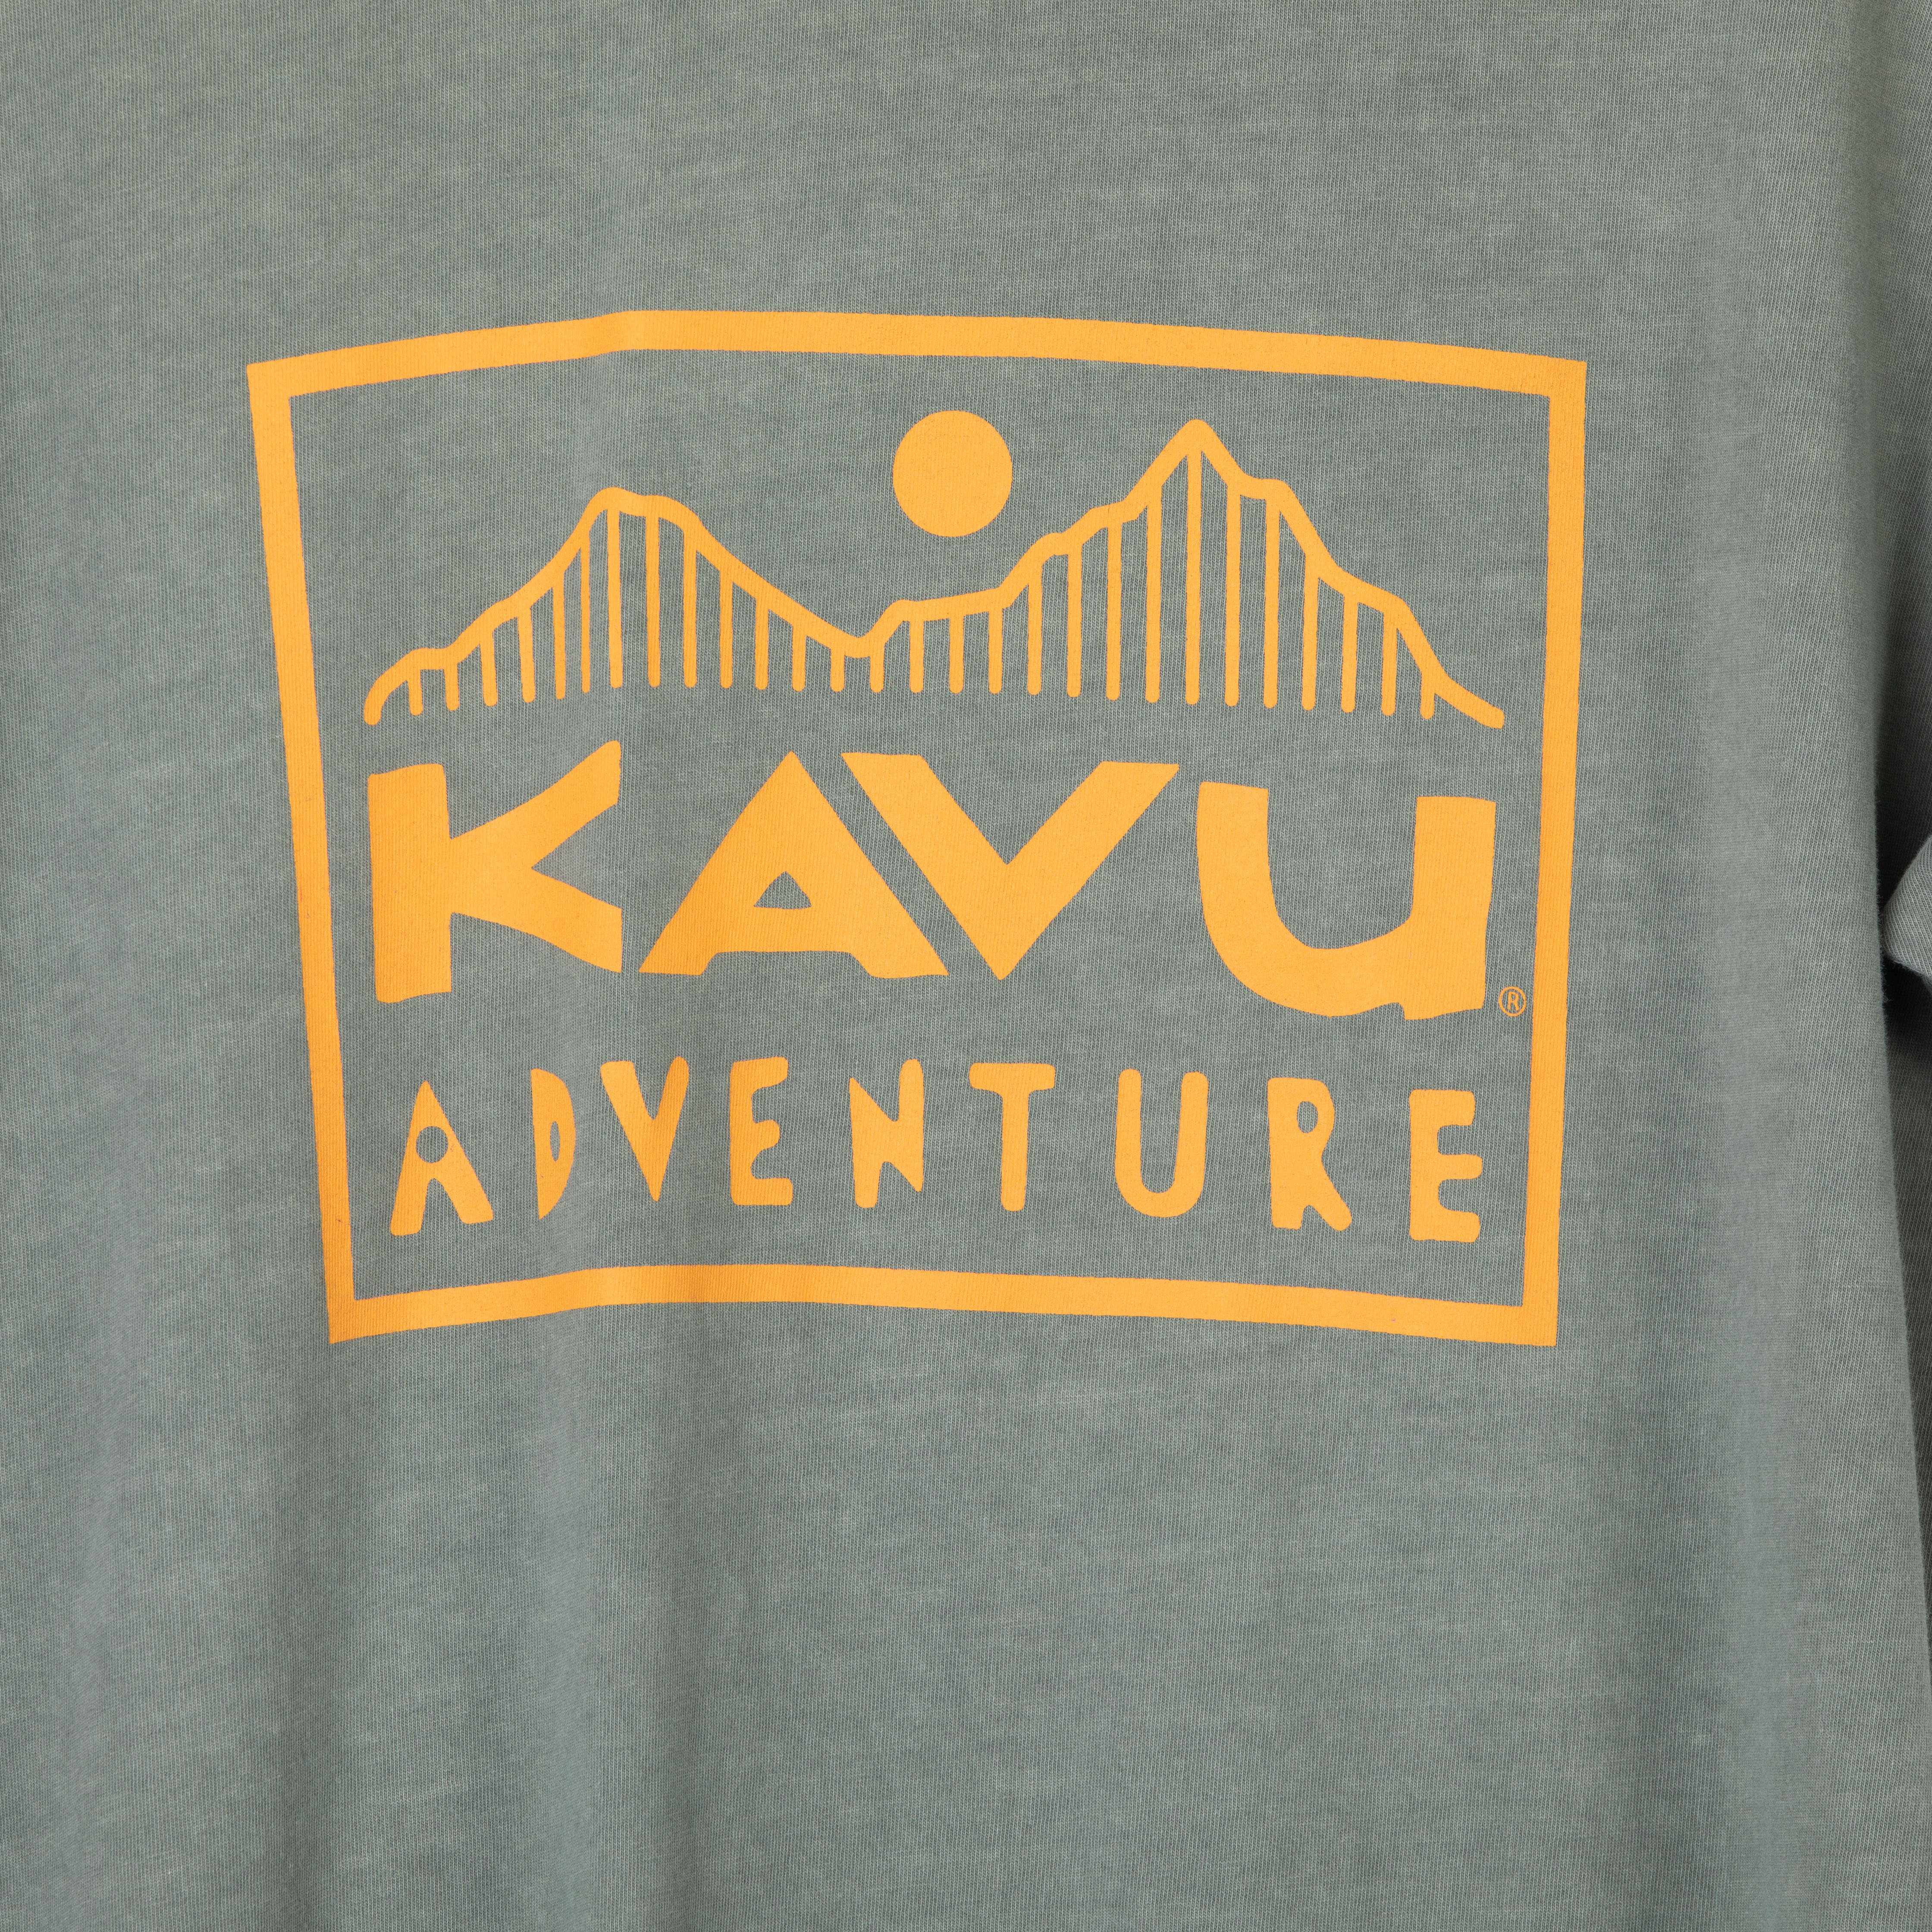 Kavu M's Set Off T-Shirt, spruce